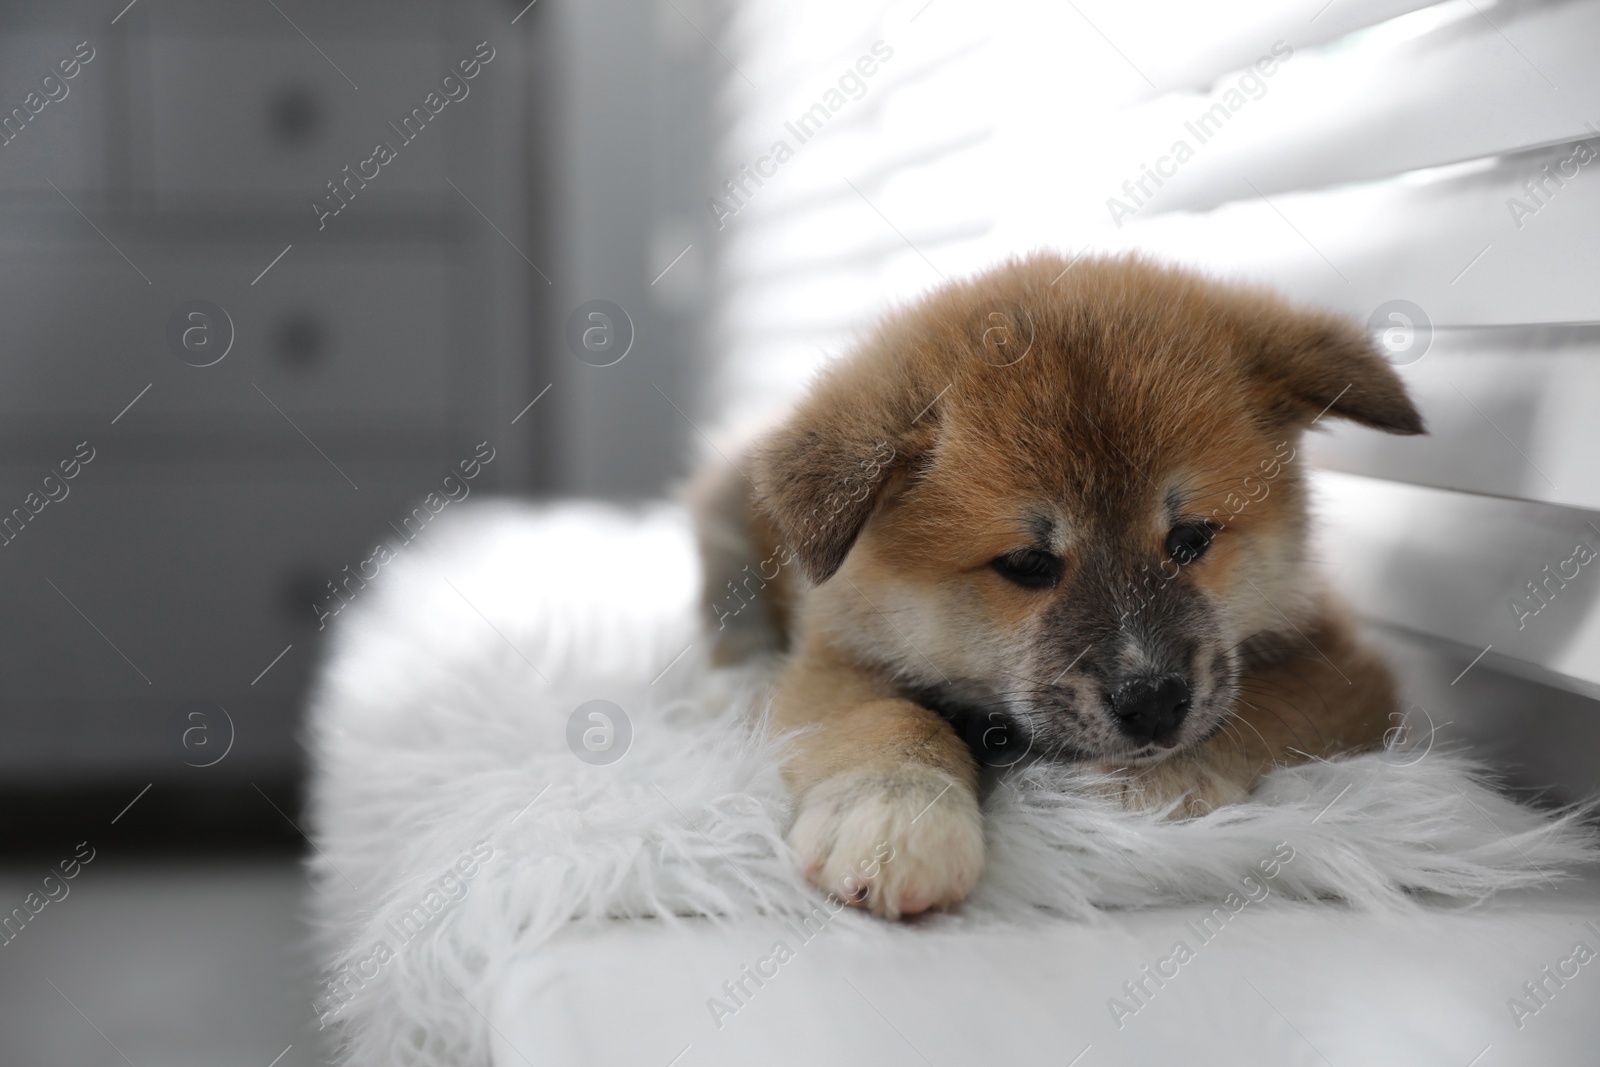 Photo of Cute Akita Inu puppy on fuzzy rug near window indoors